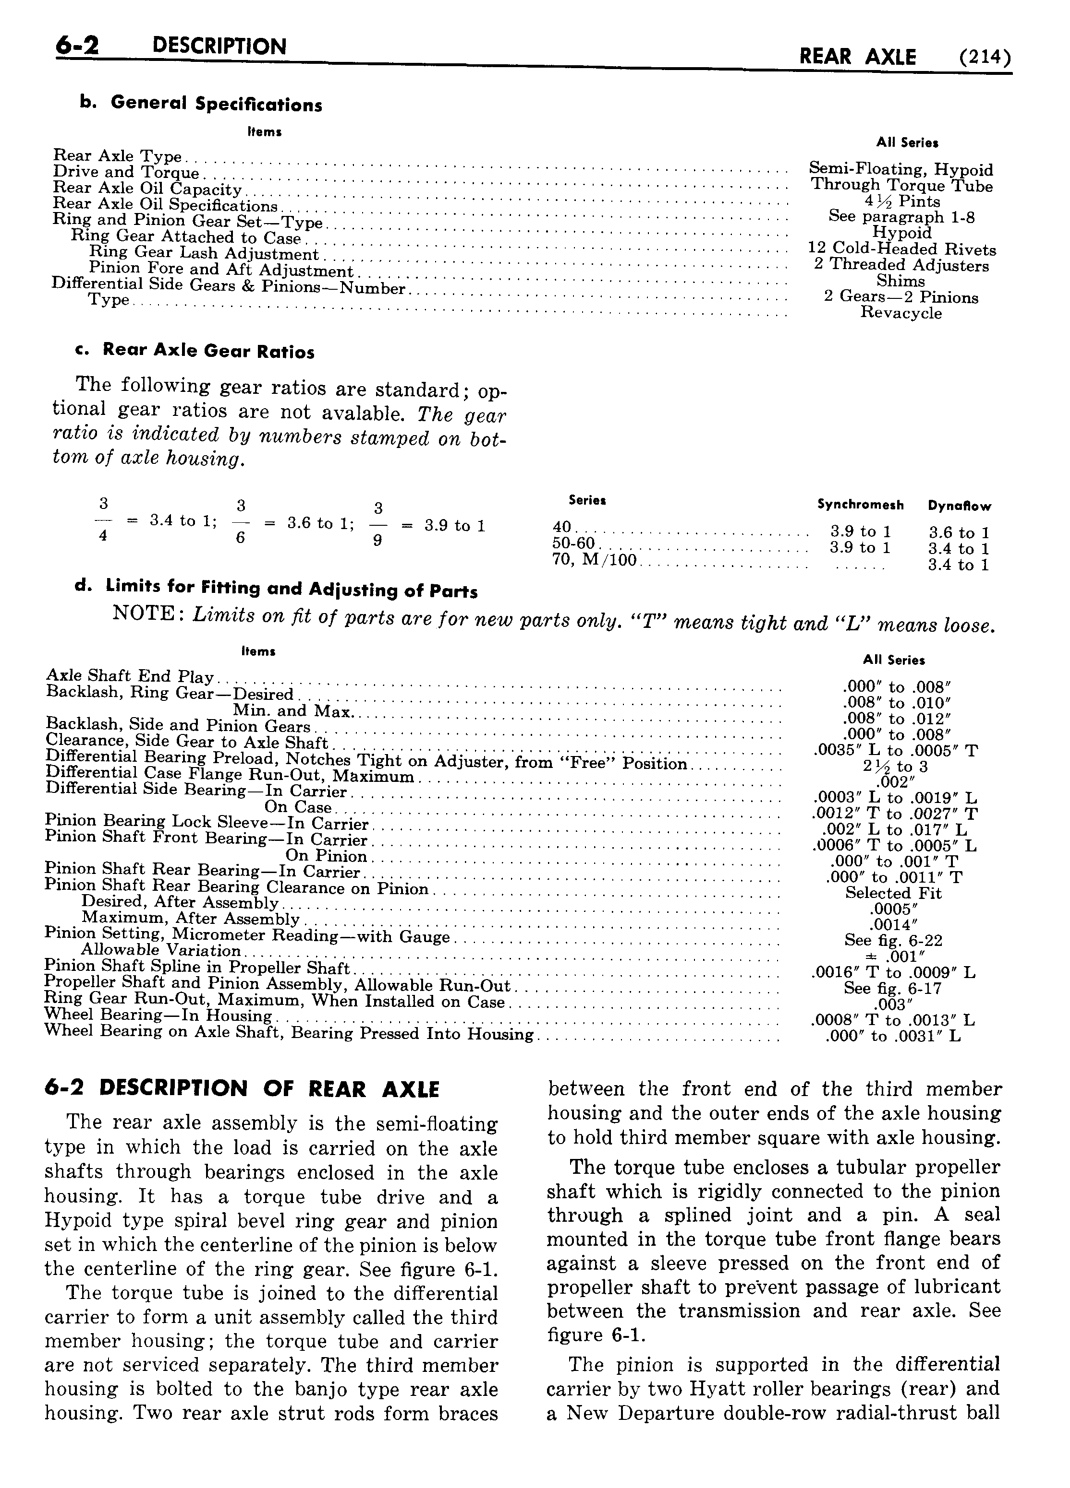 n_07 1954 Buick Shop Manual - Rear Axle-002-002.jpg